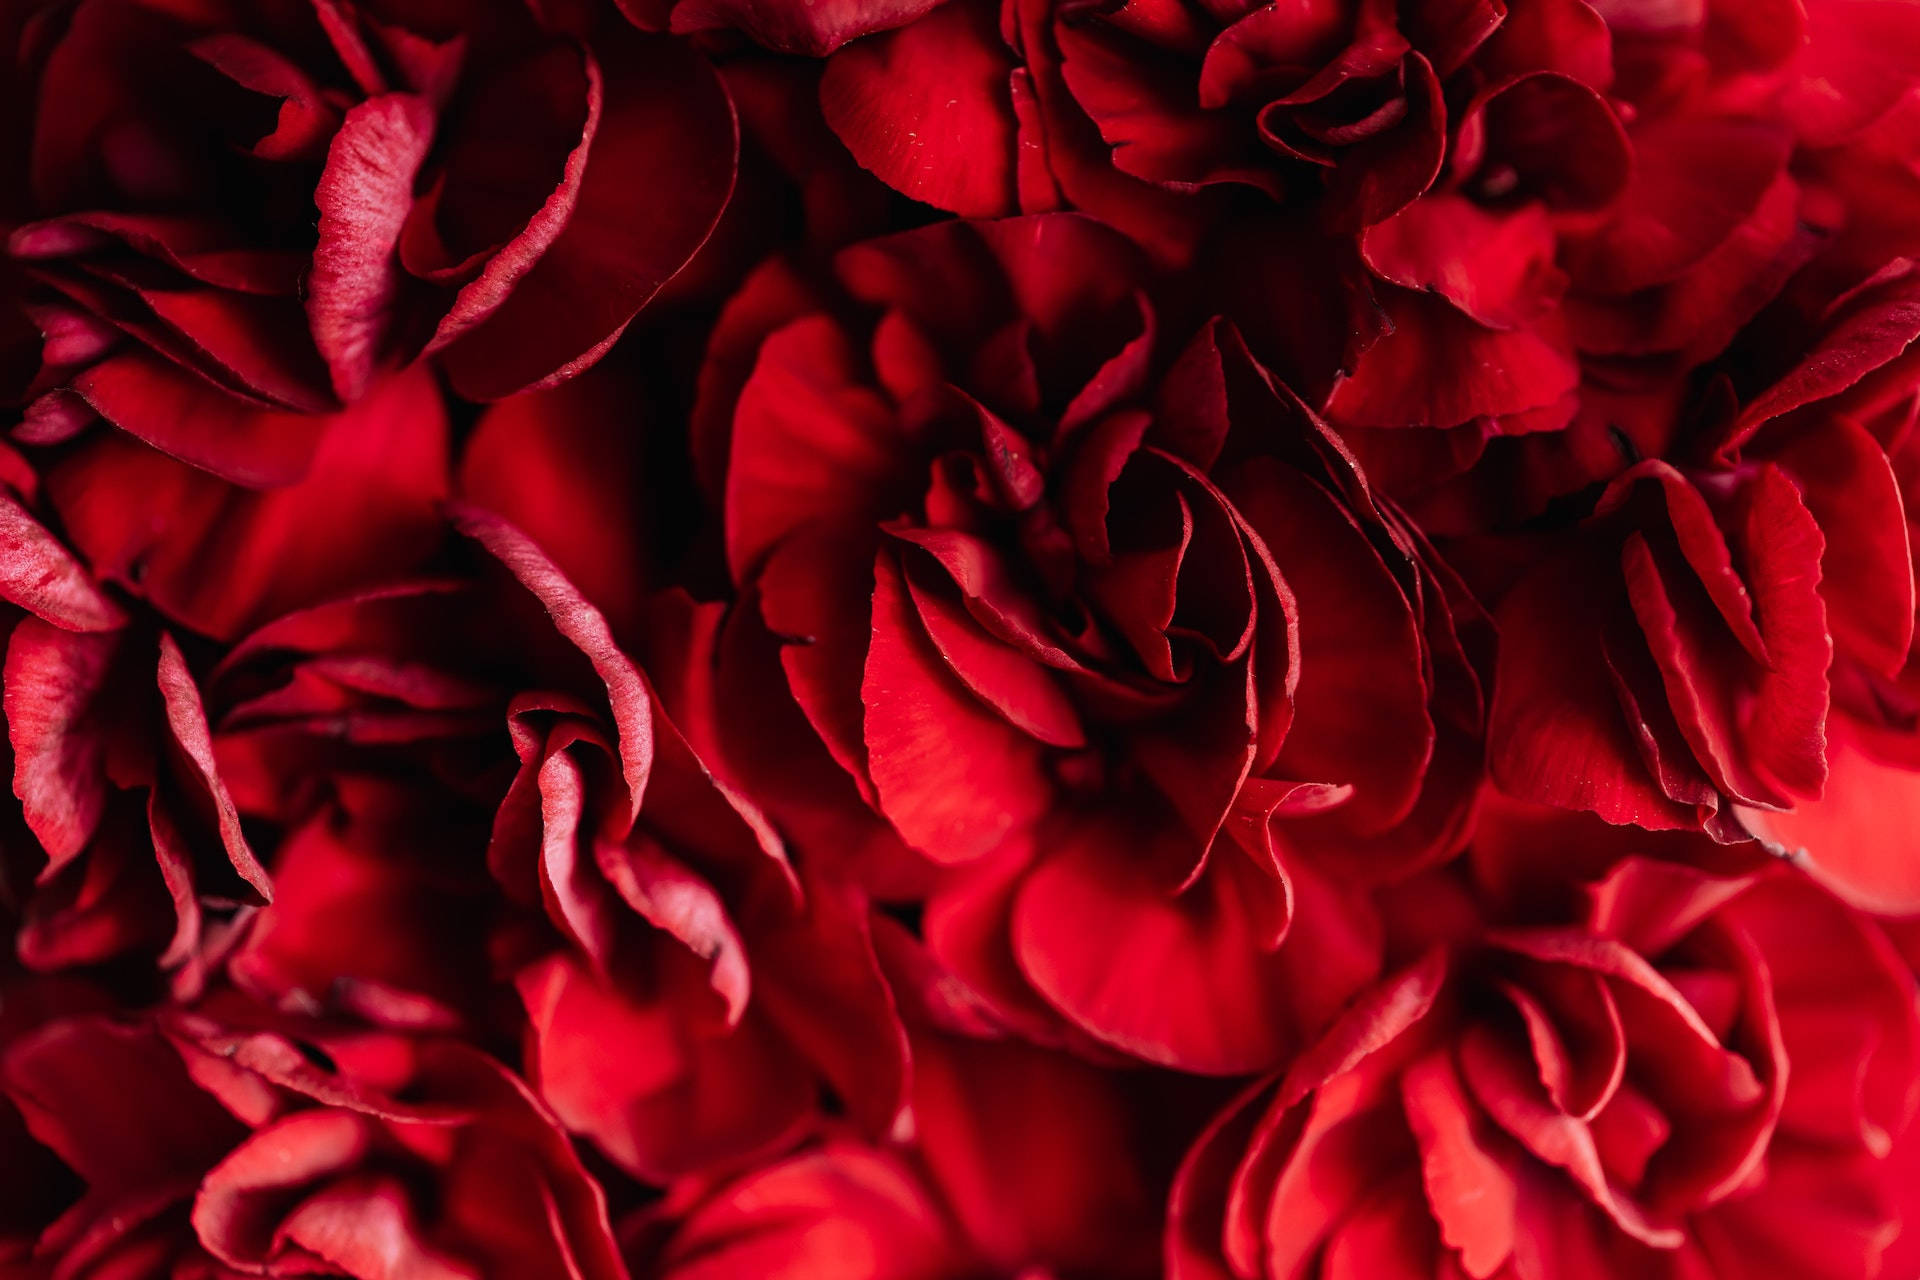 Red Roses Scarlet Petals Wallpaper